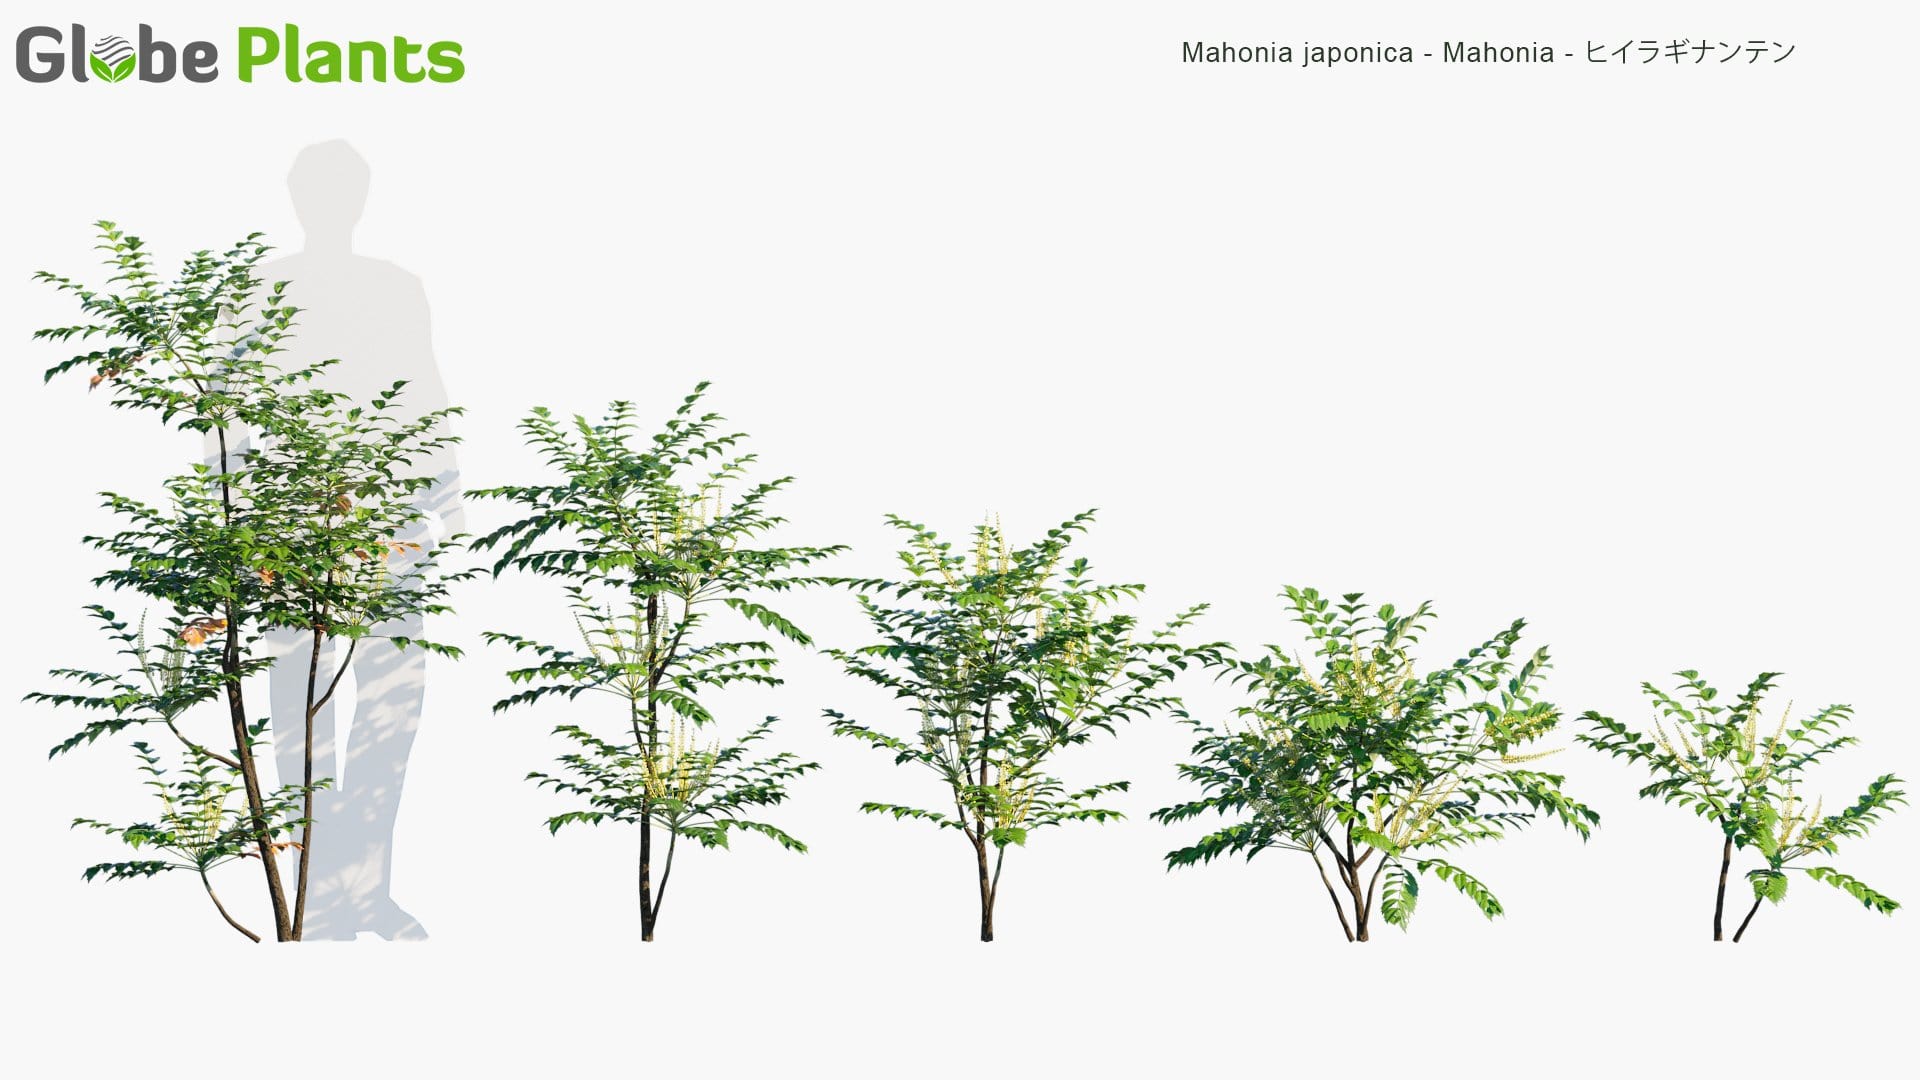 Mahonia Japonica - Mahonia, ヒイラギナンテン (3D Model)